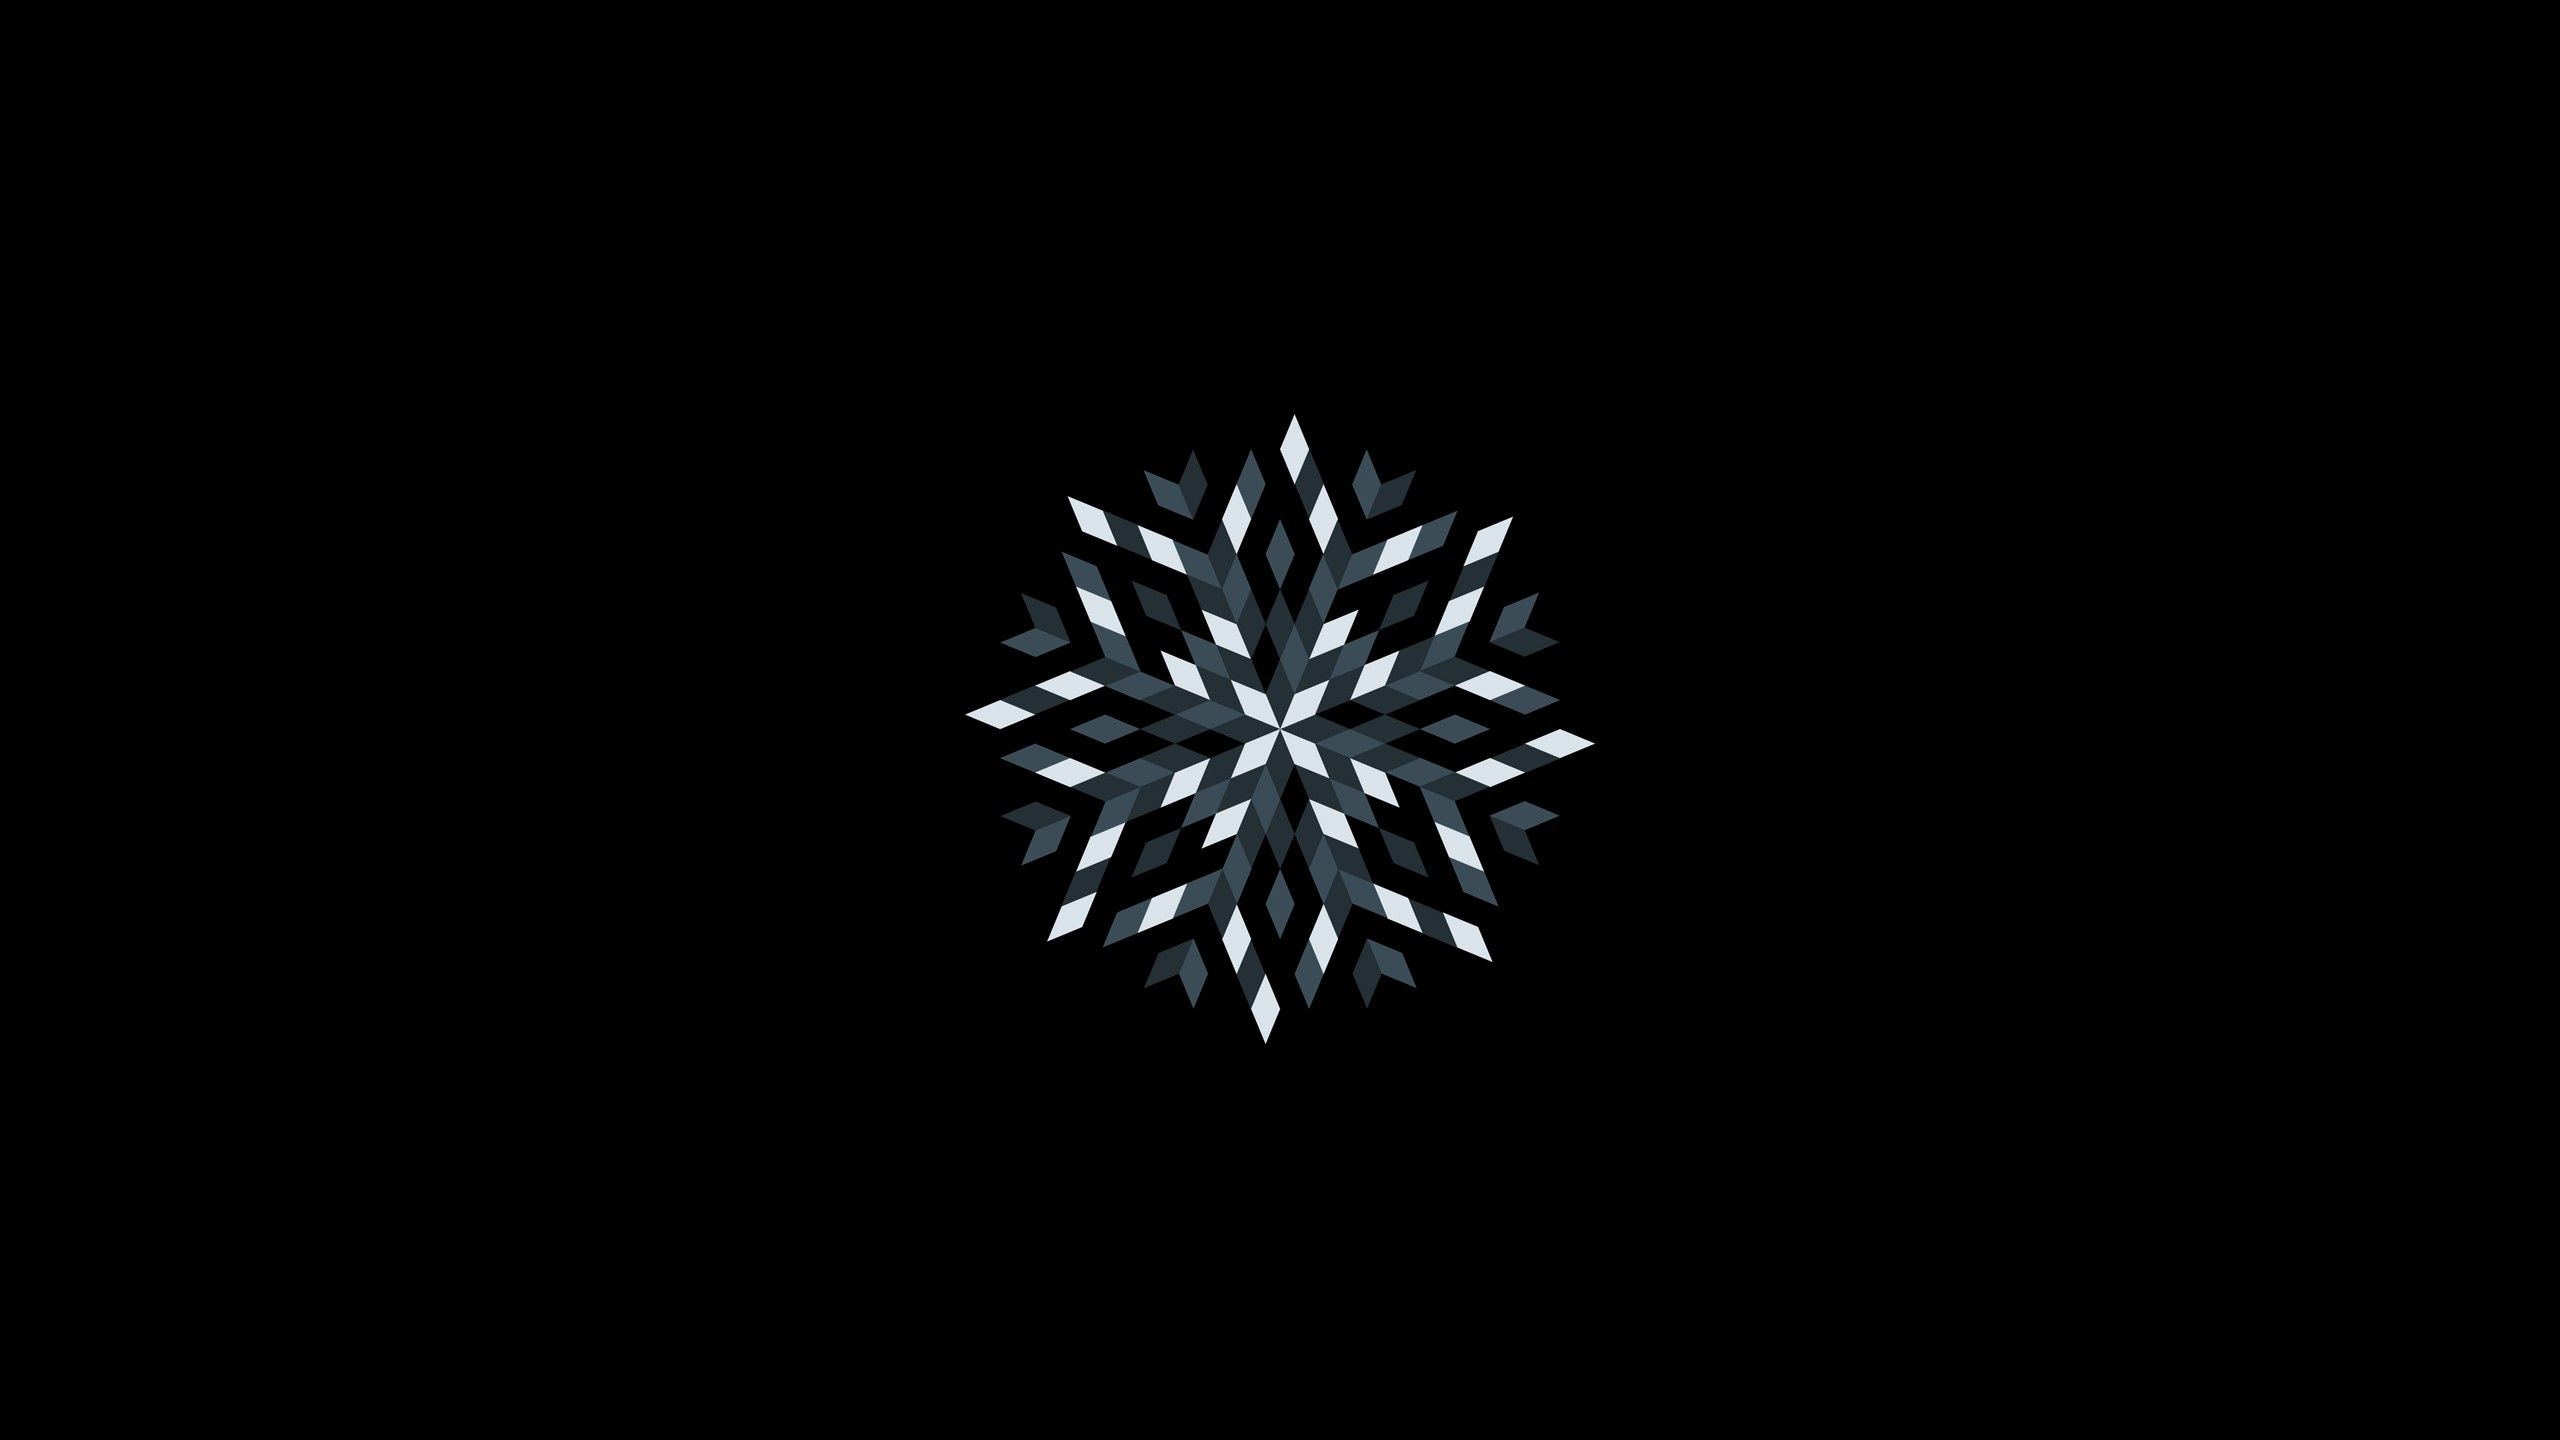 A black background with white stars - Diamond